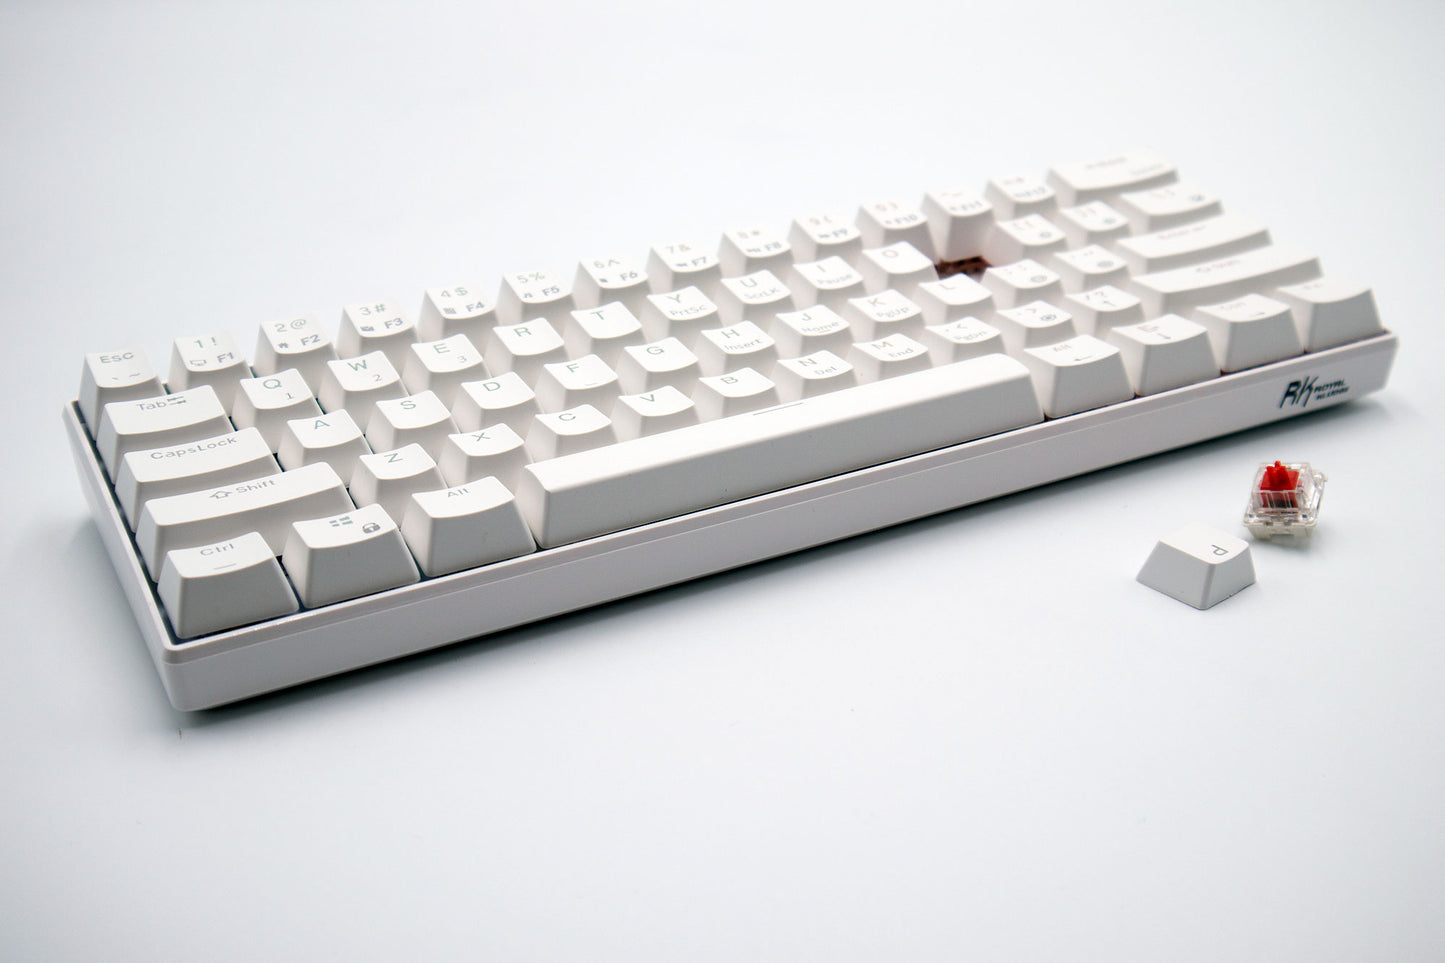 Royal Kludge RK61 RGB 60% Mechanical Keyboard – Upgrade Keyboards